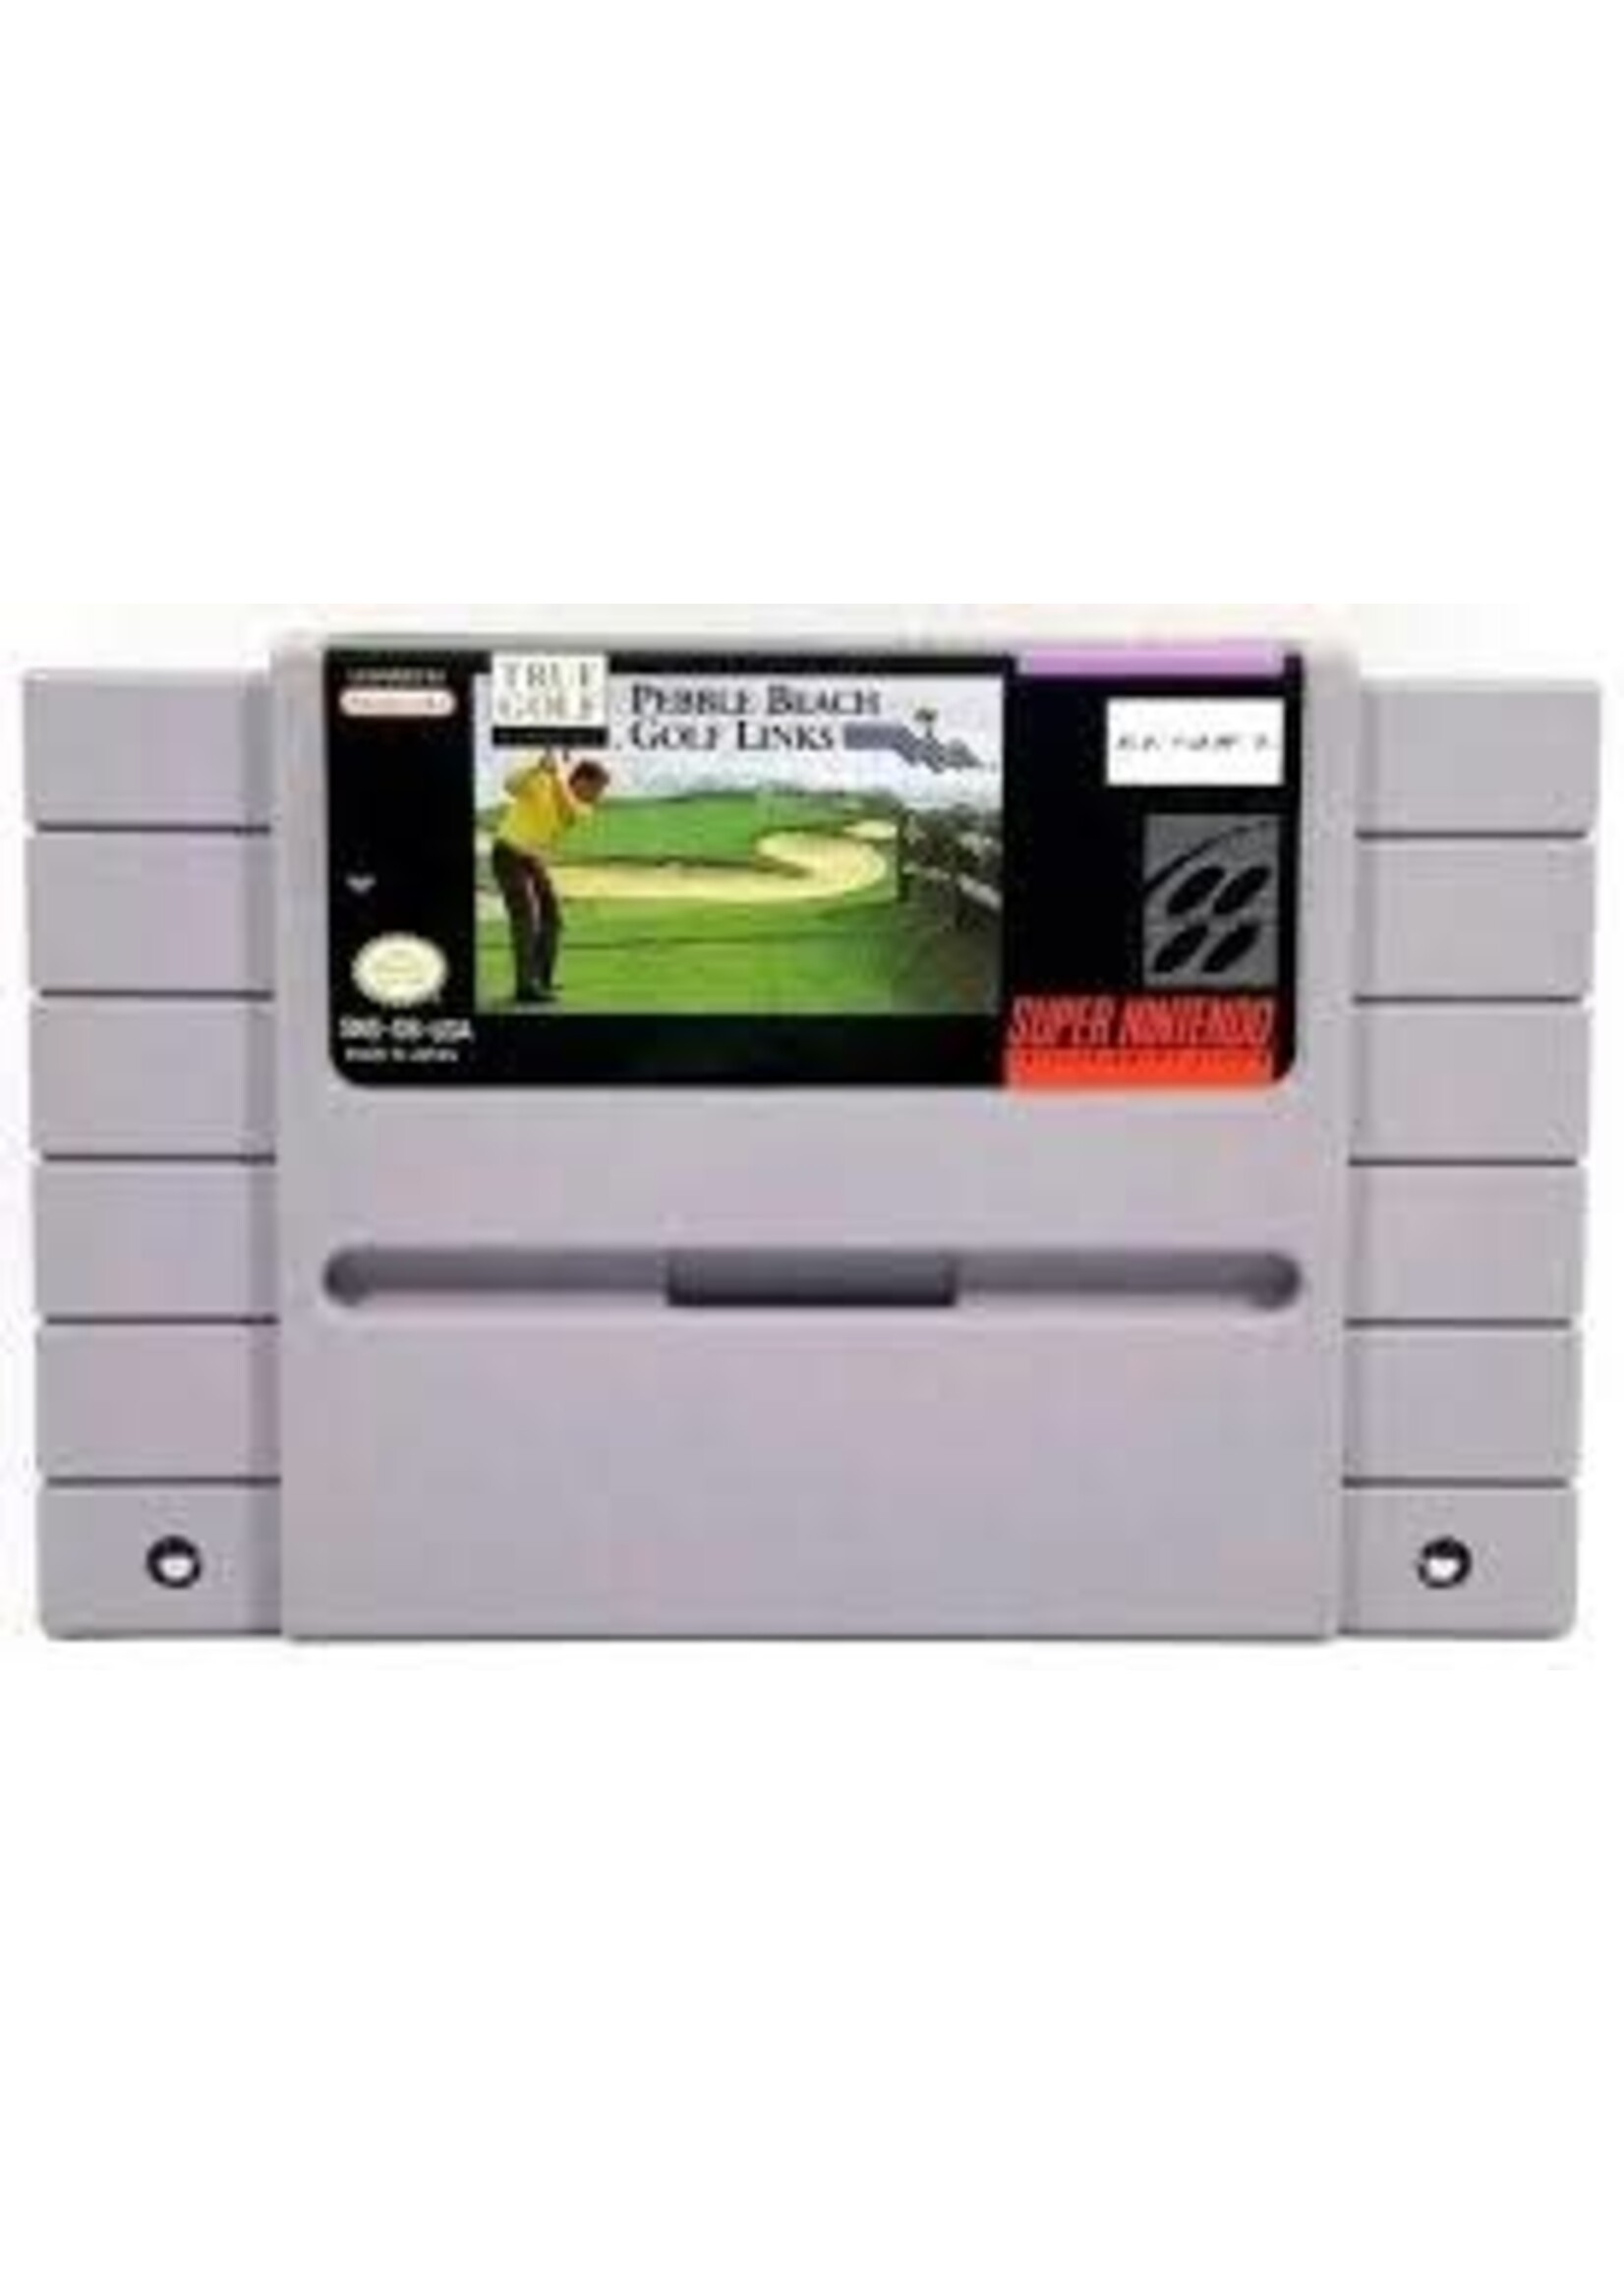 Nintendo Super Nintendo (SNES) Pebble Beach Golf Links